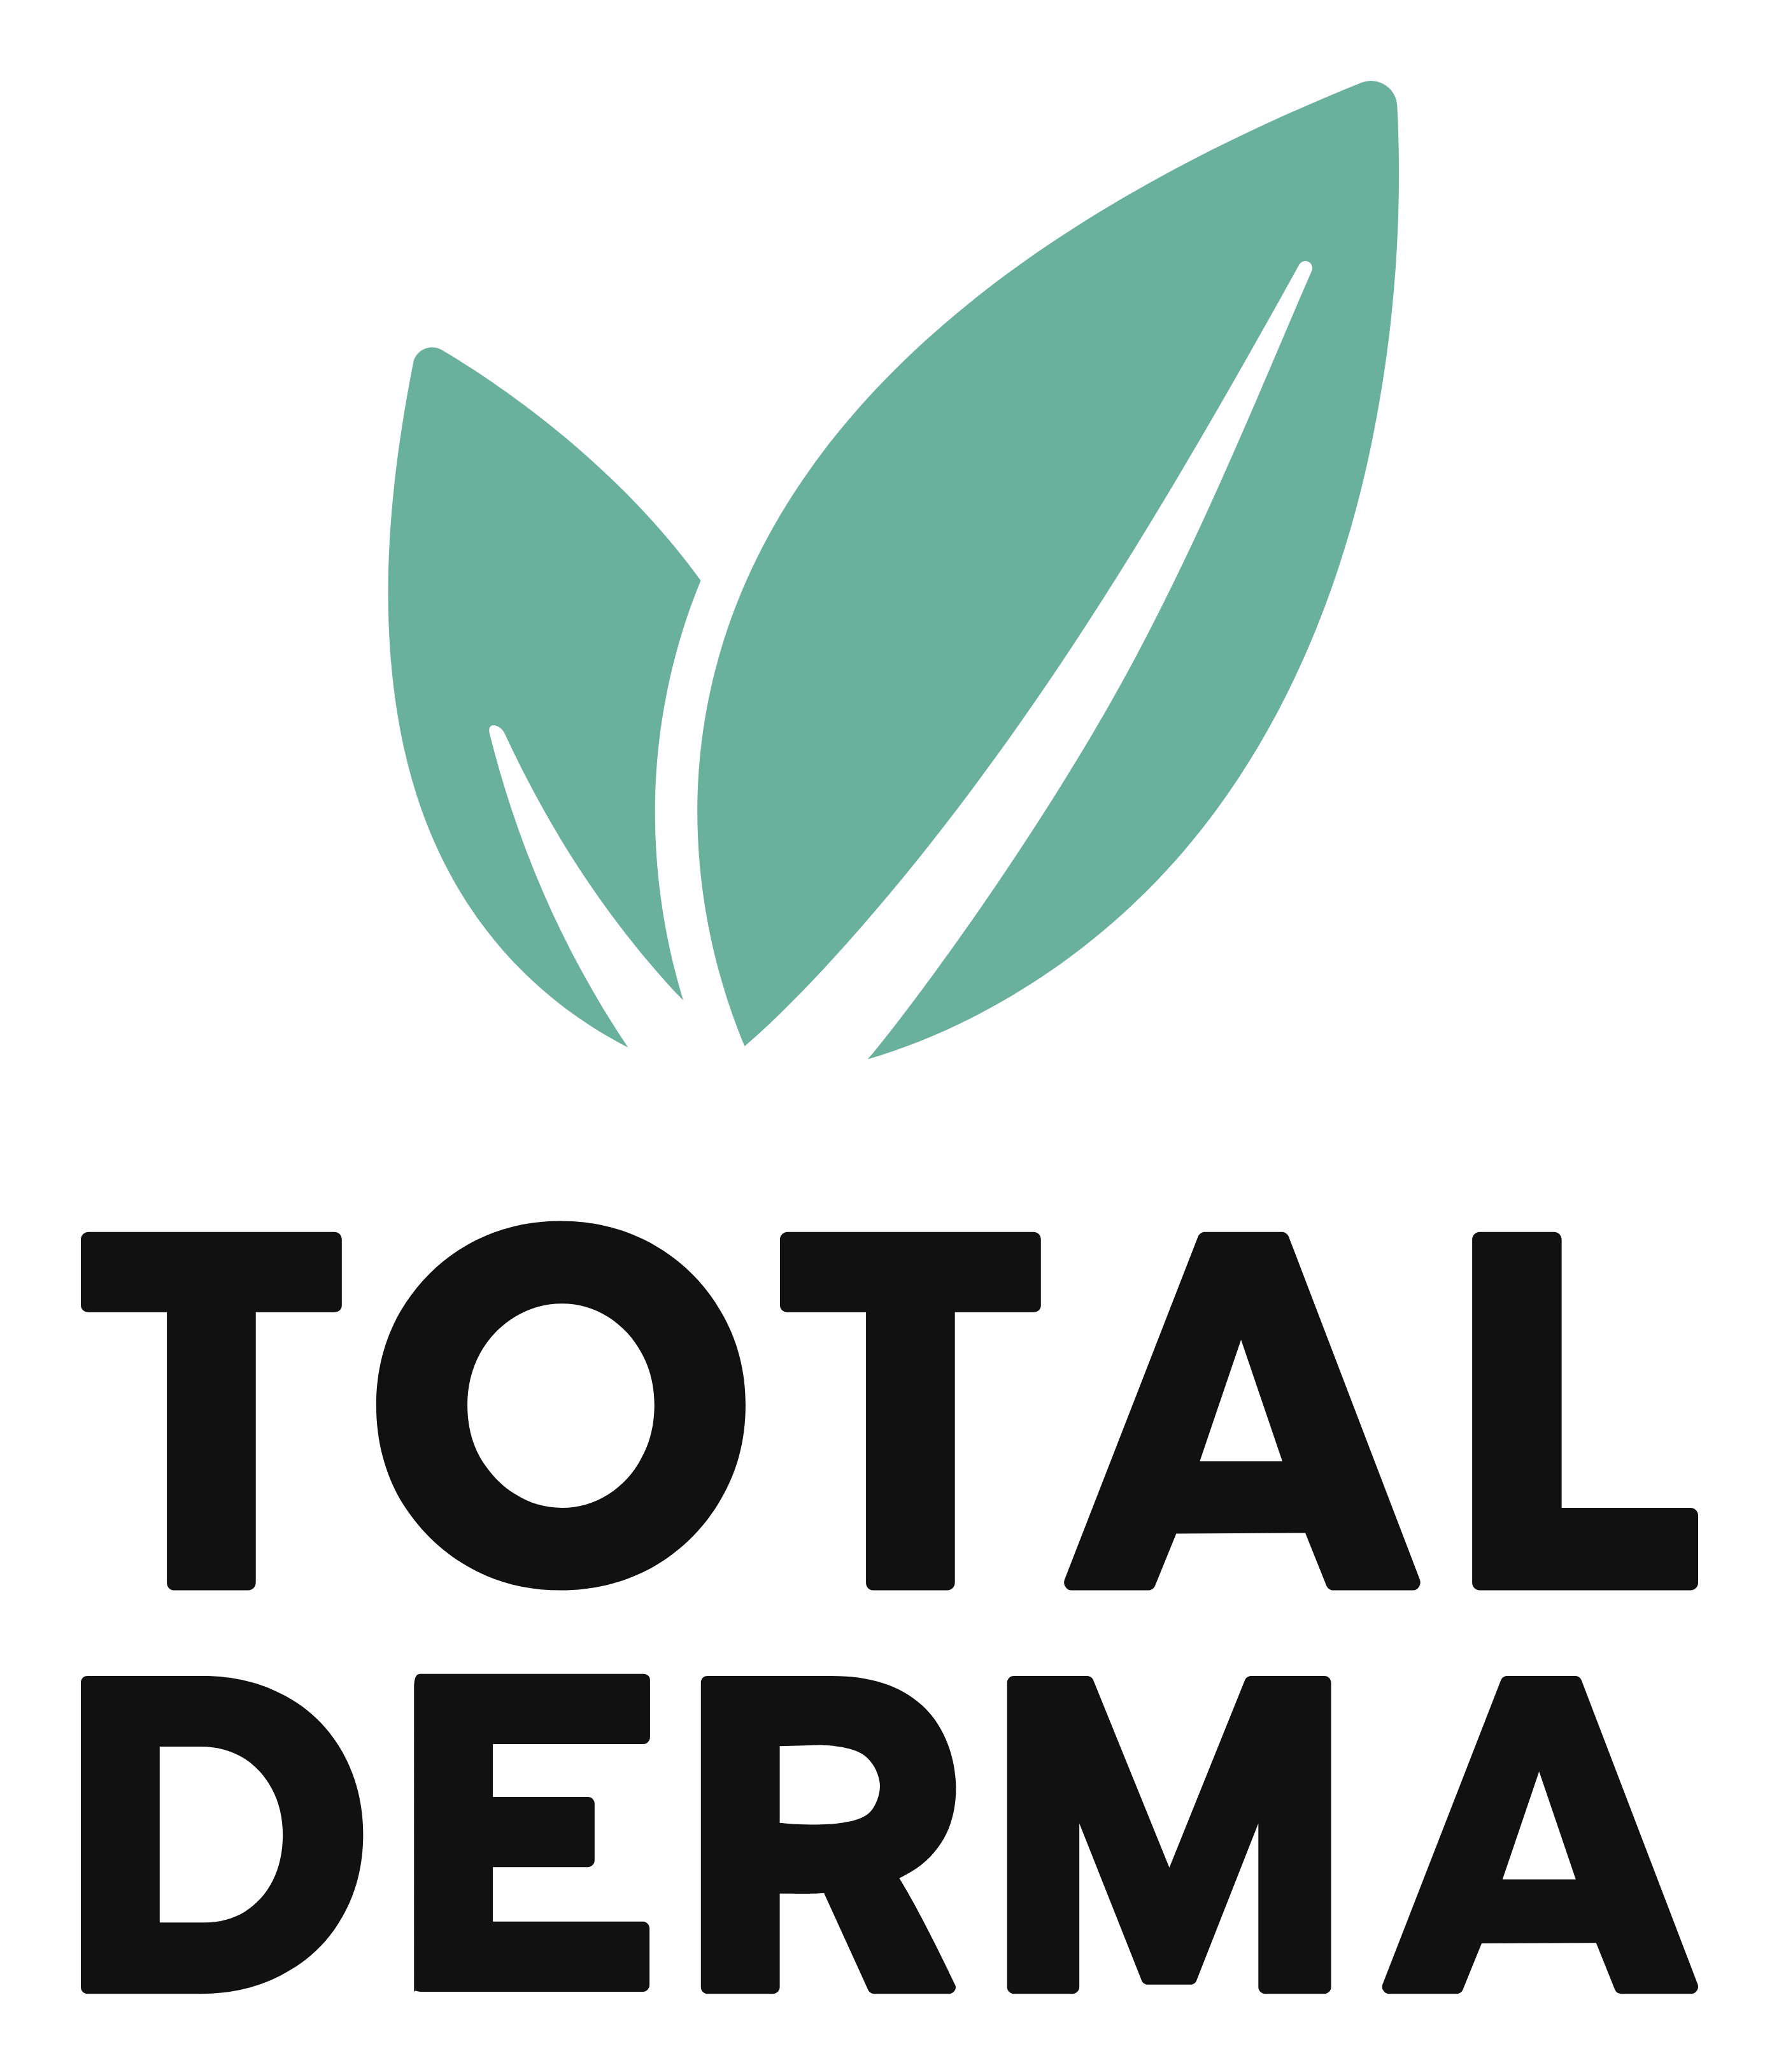 Total Derma